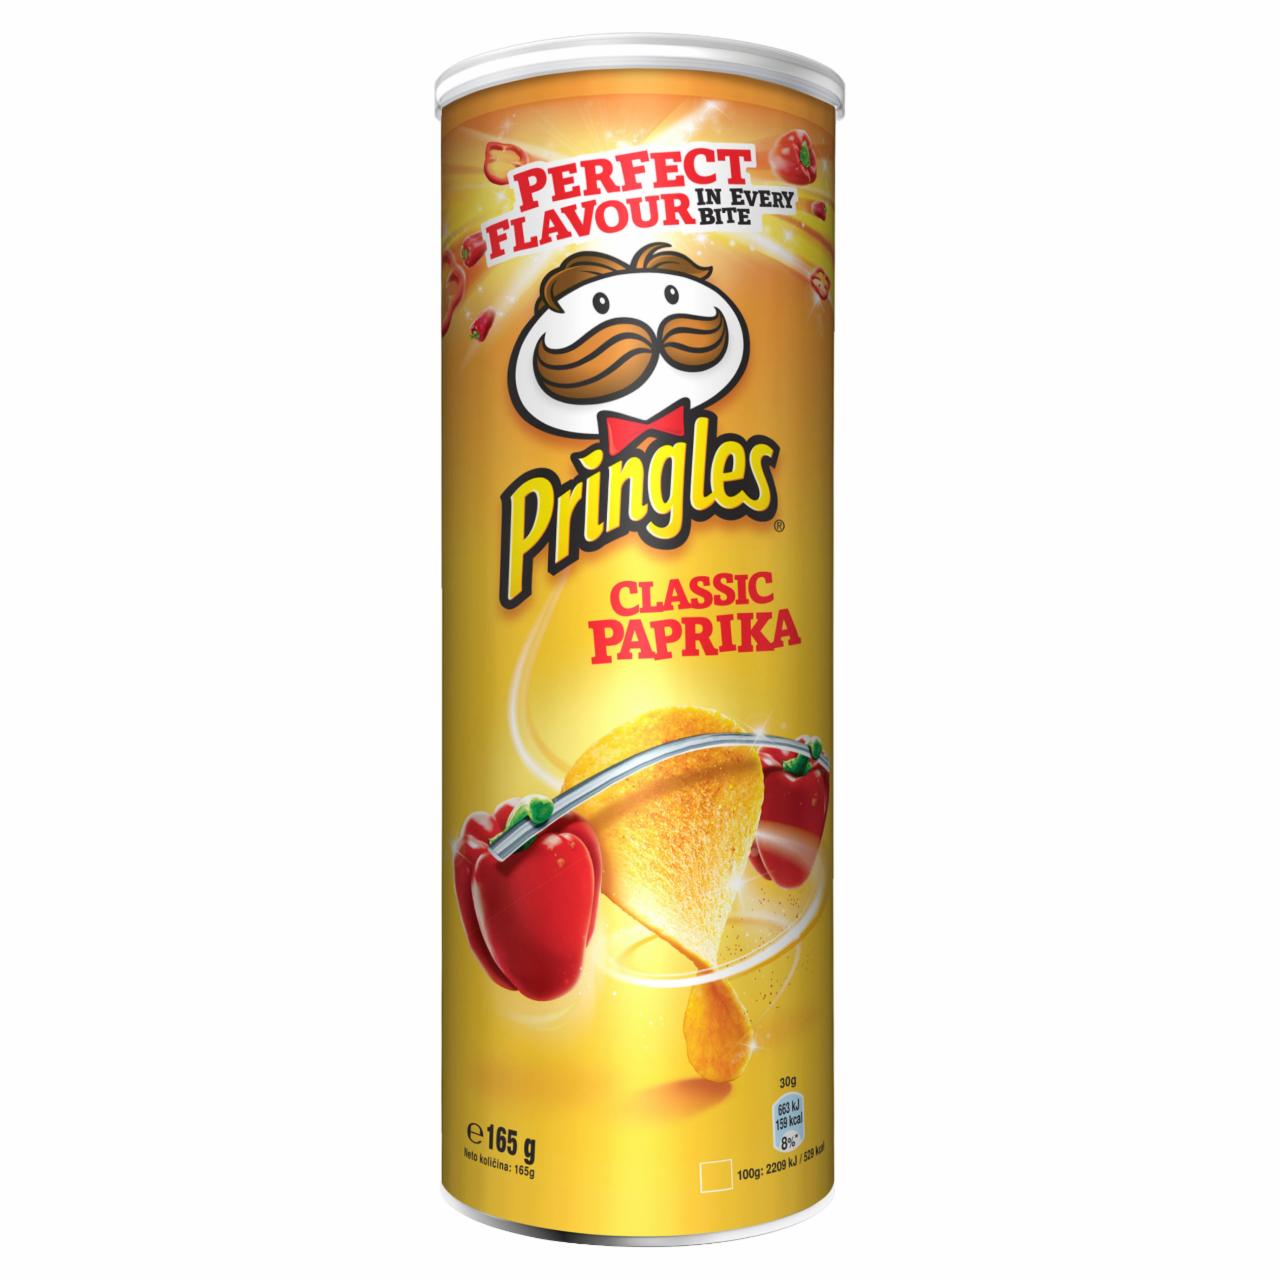 Zdjęcia - Classic Paprika Pringles